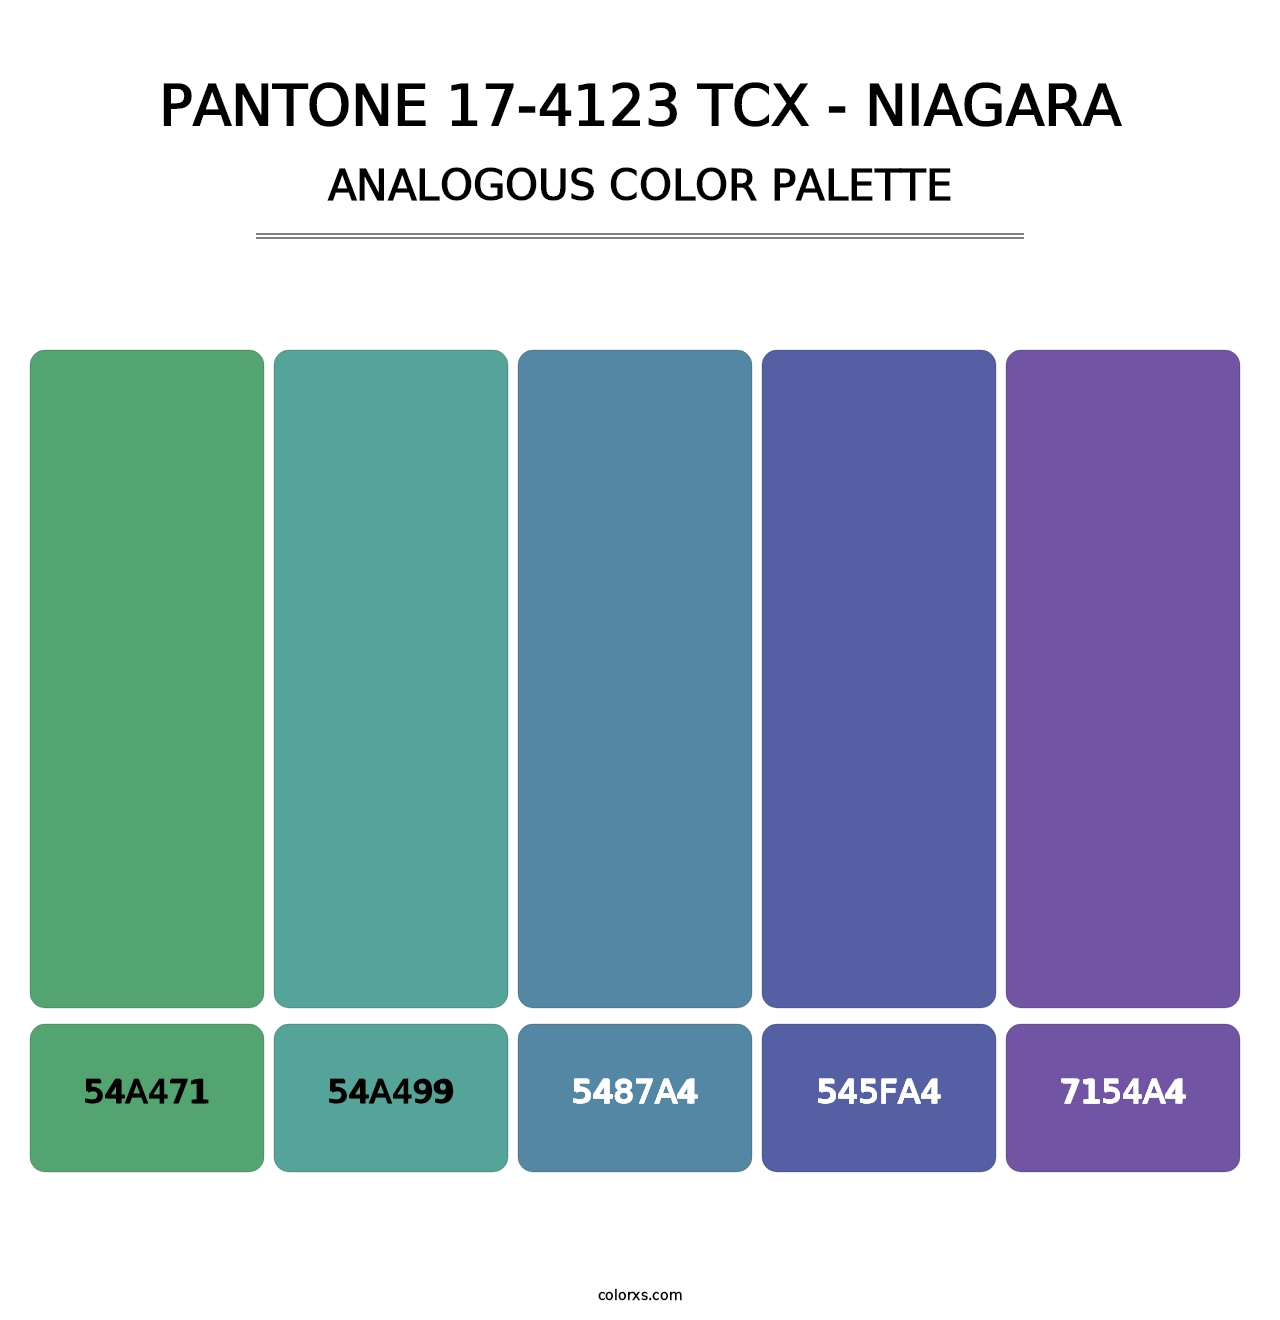 PANTONE 17-4123 TCX - Niagara - Analogous Color Palette